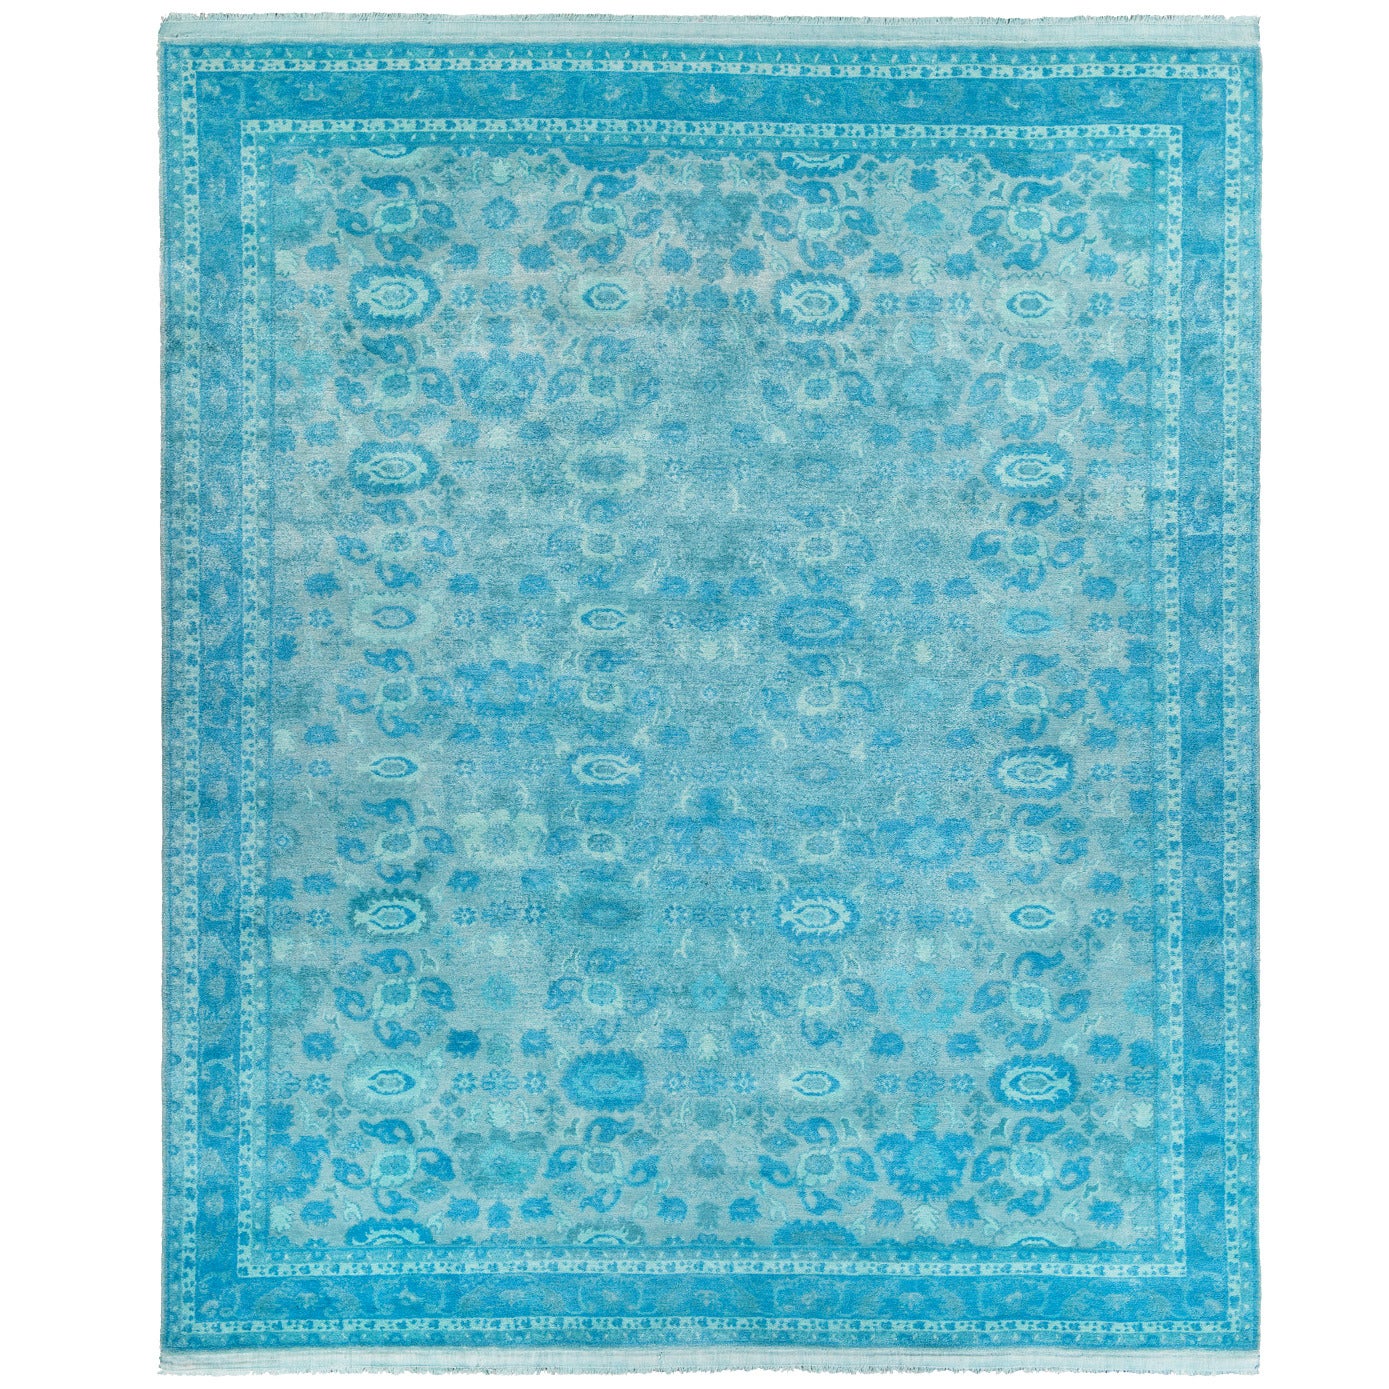 Bidjar Terquoise from Bidjar Carpet Collection by Jan Kath